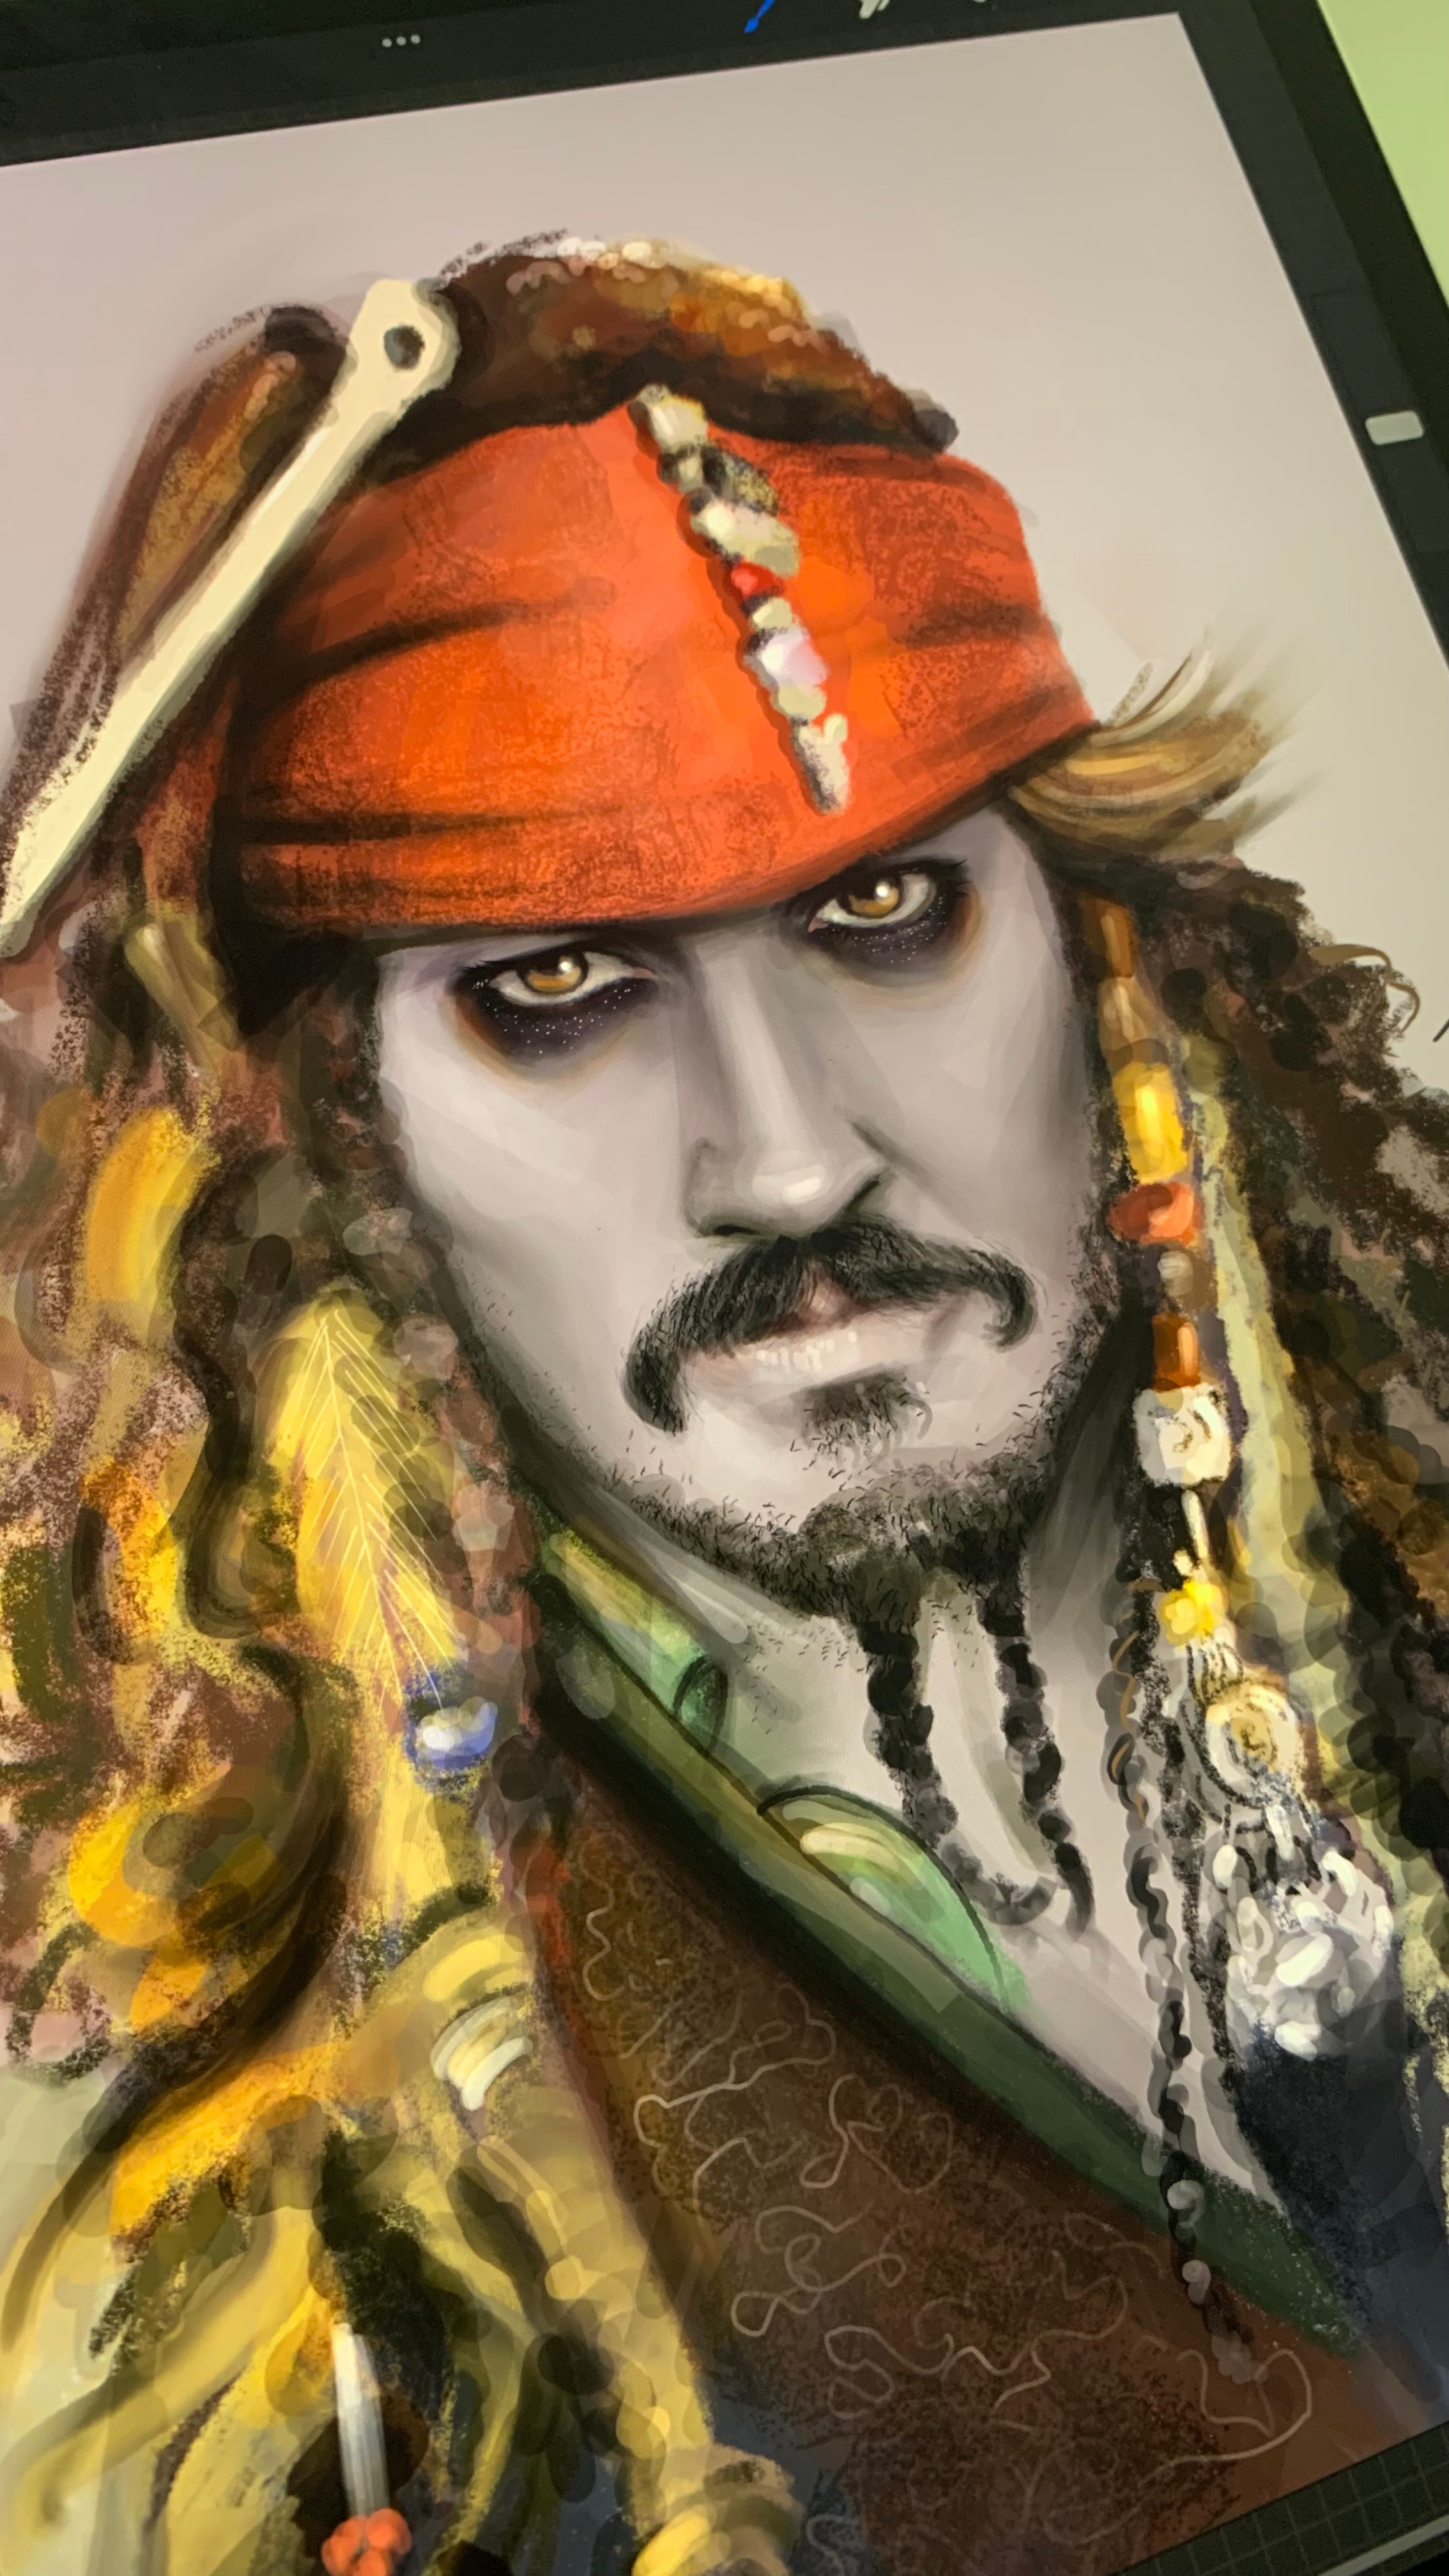 Captain Jack Sparrow's character 